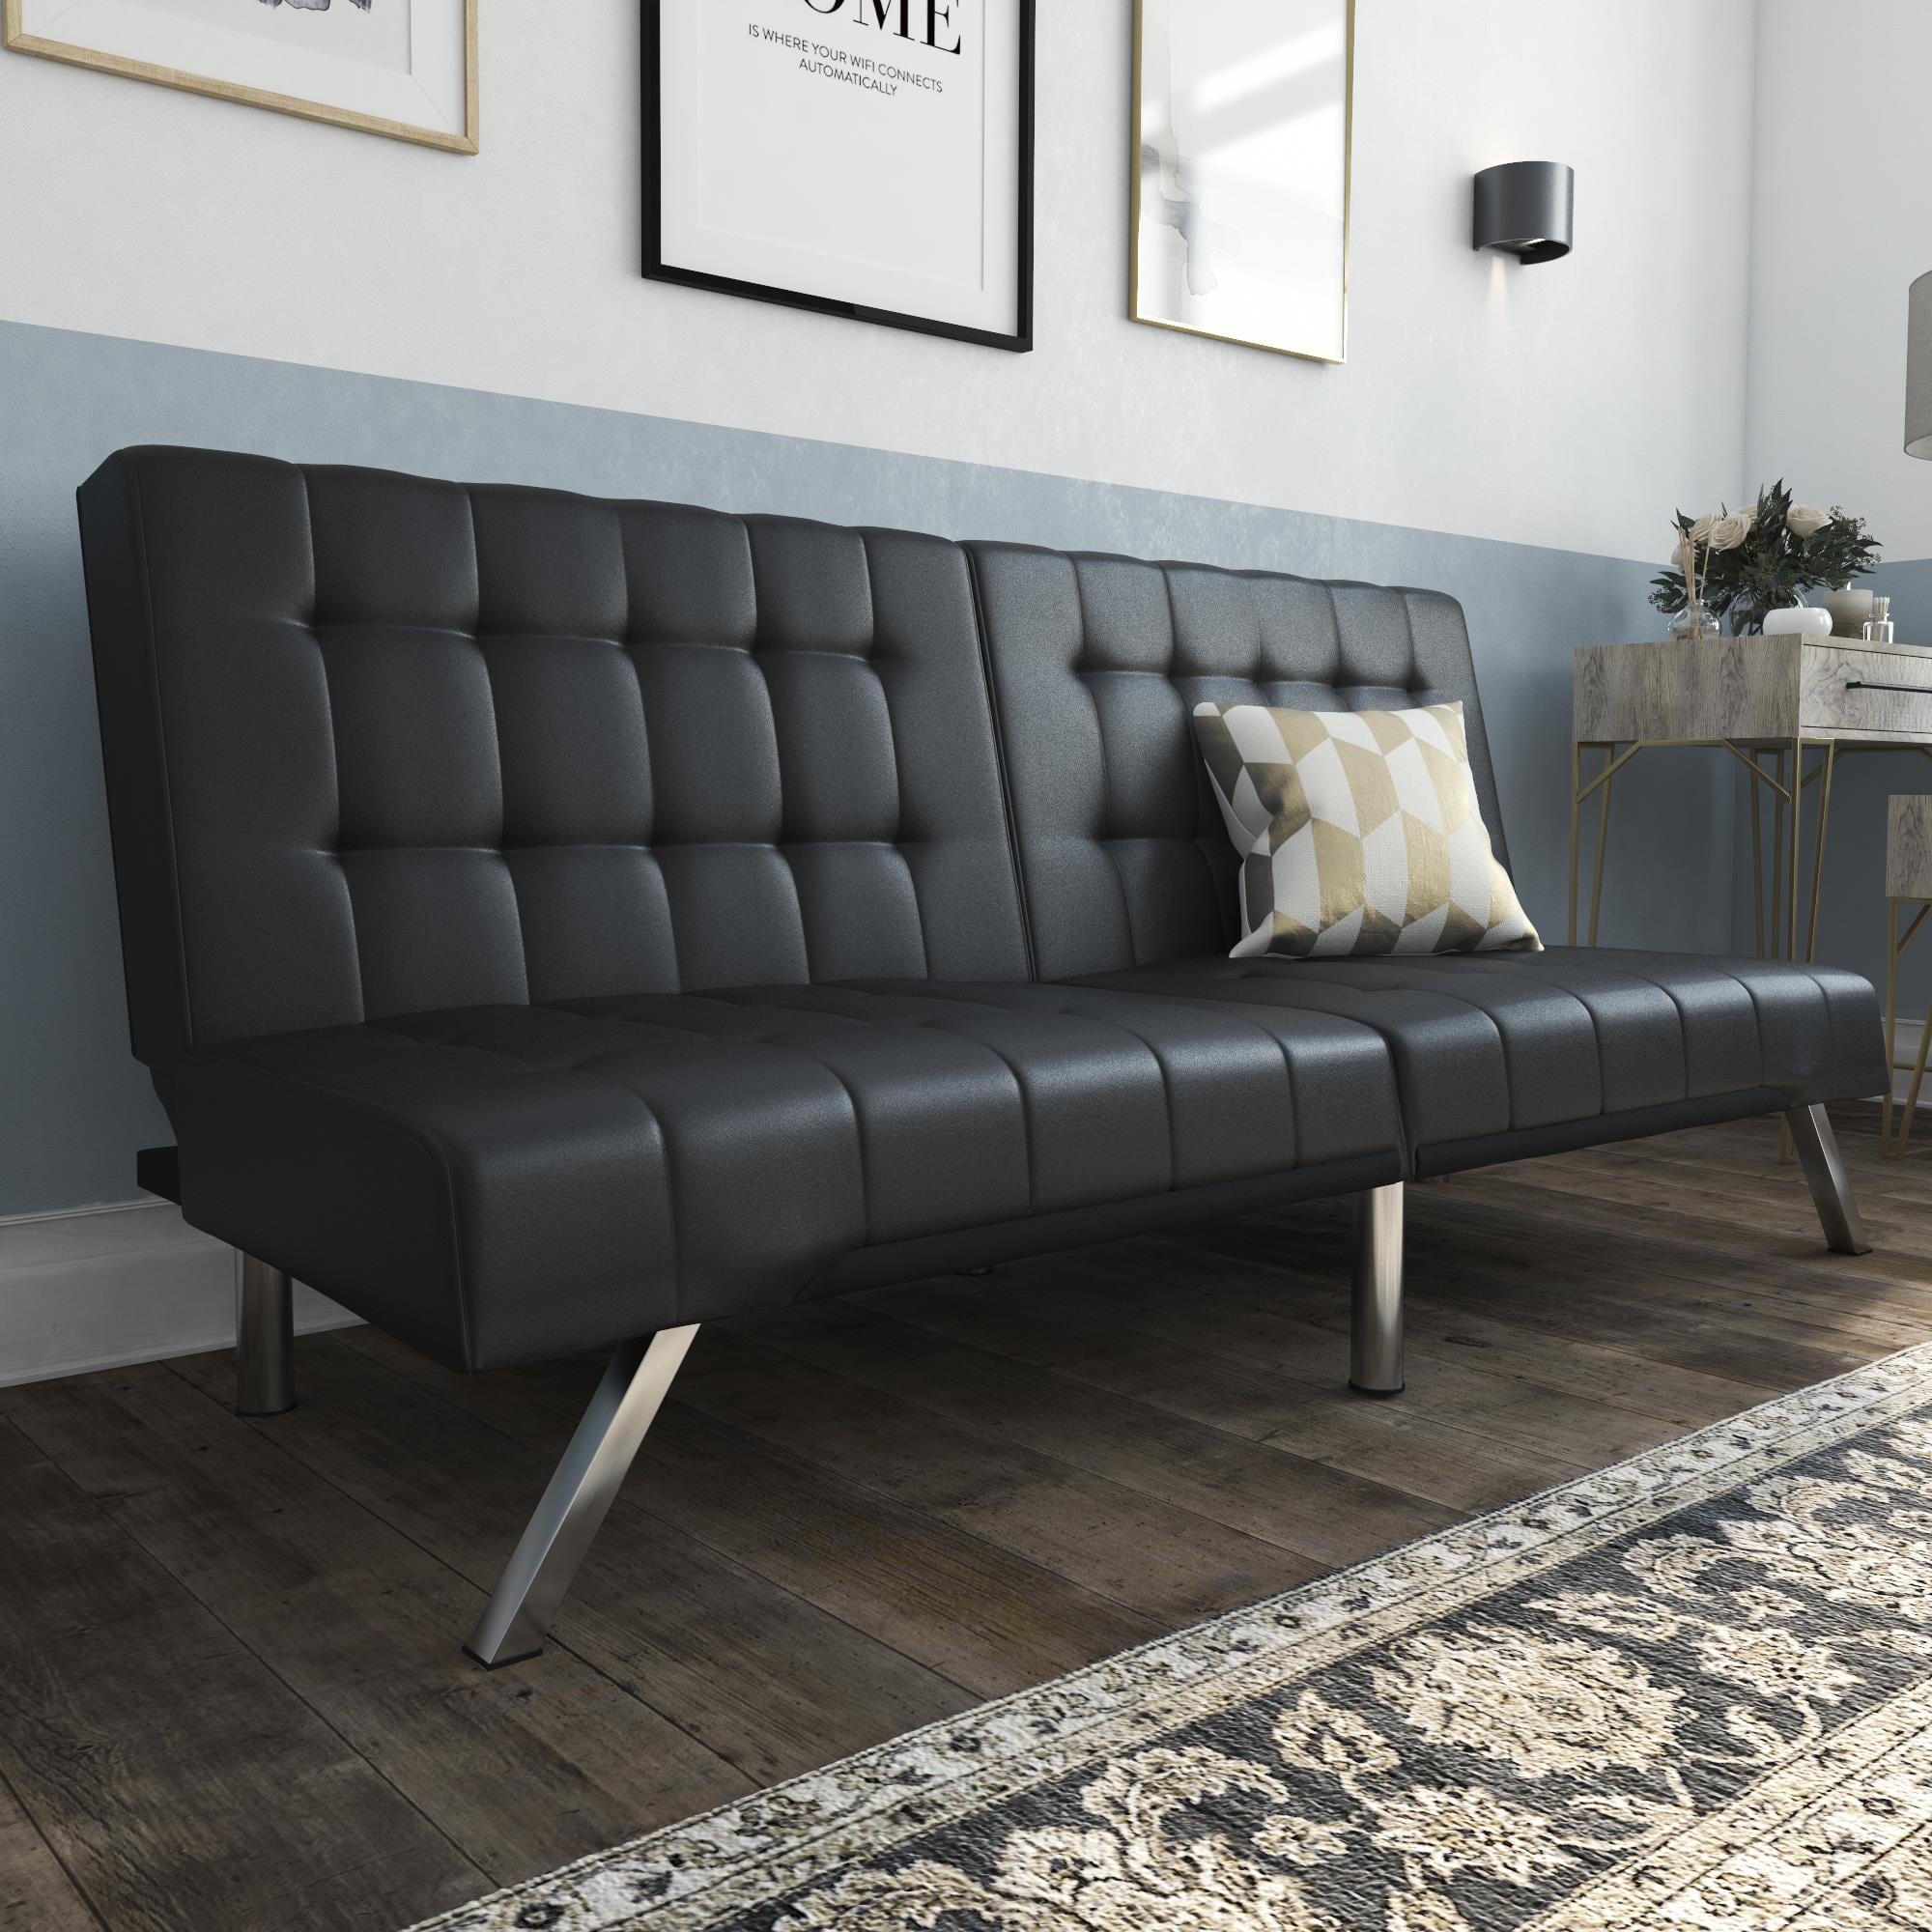 Dhp Emily Convertible Tufted Futon Sofa, Dhp Emily Convertible Futon Sofa Couch Black Faux Leather